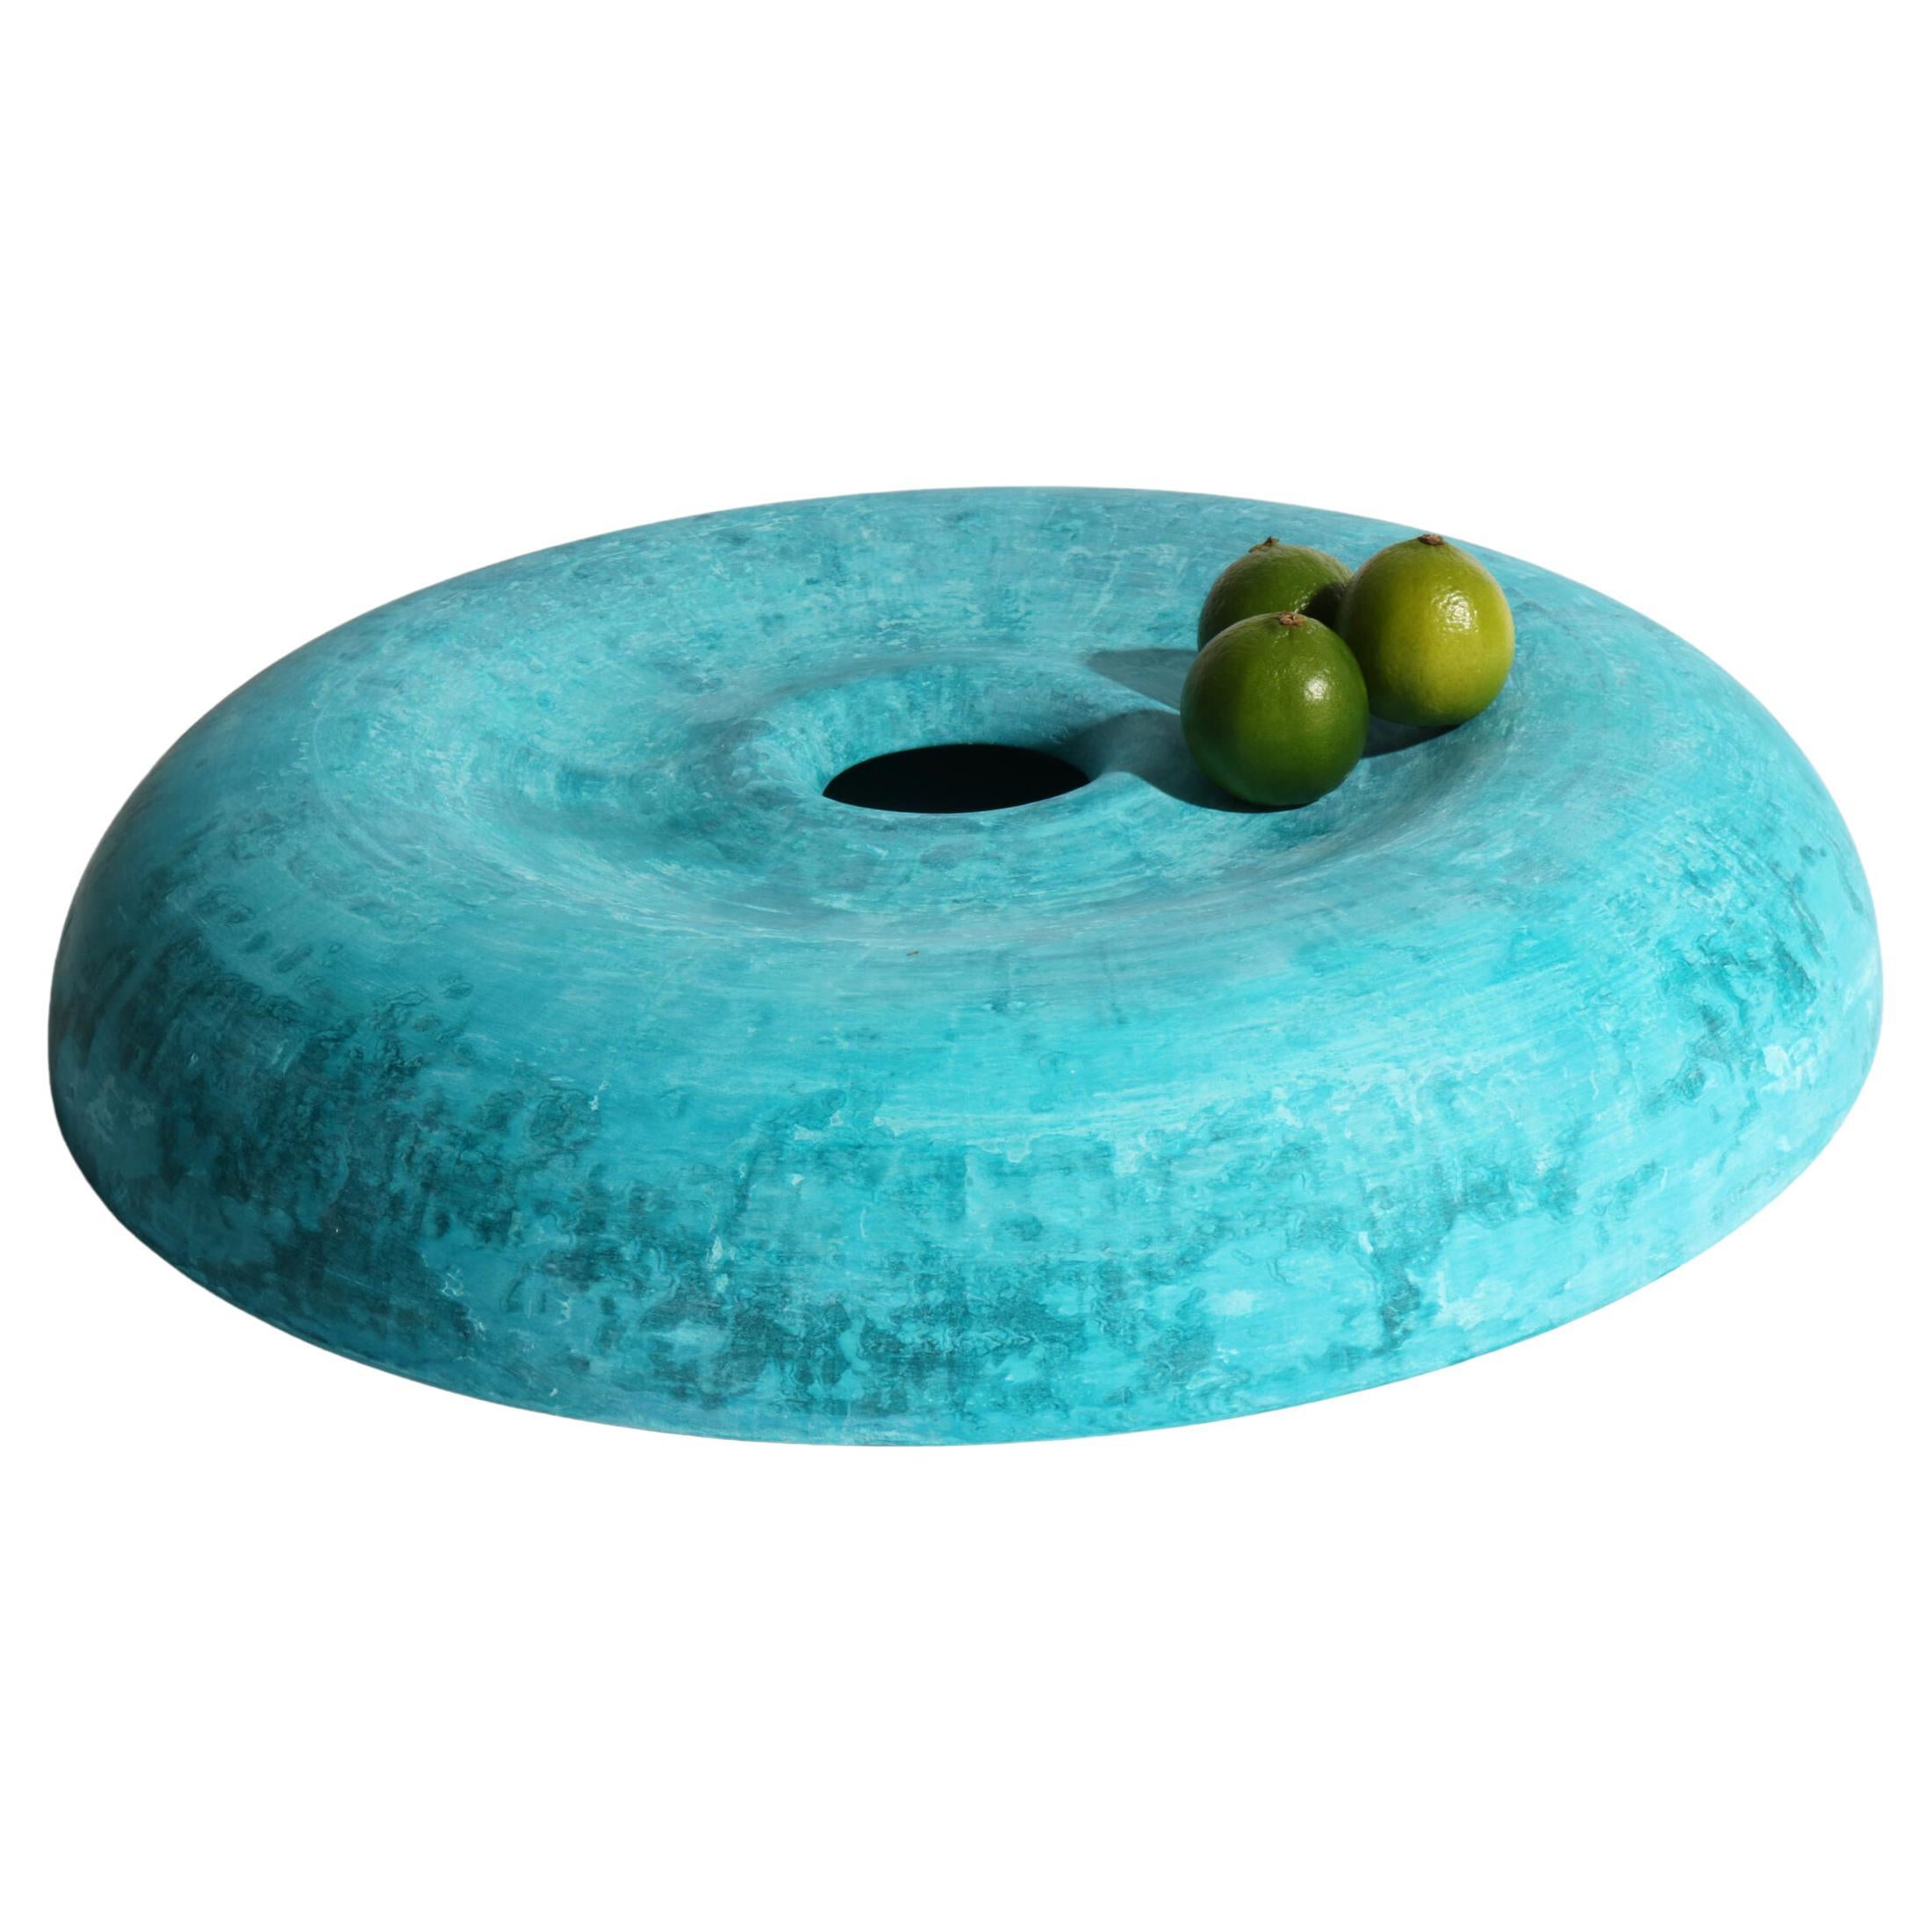 Twirl Bowl, Ocean Blue by Lenny Stöpp